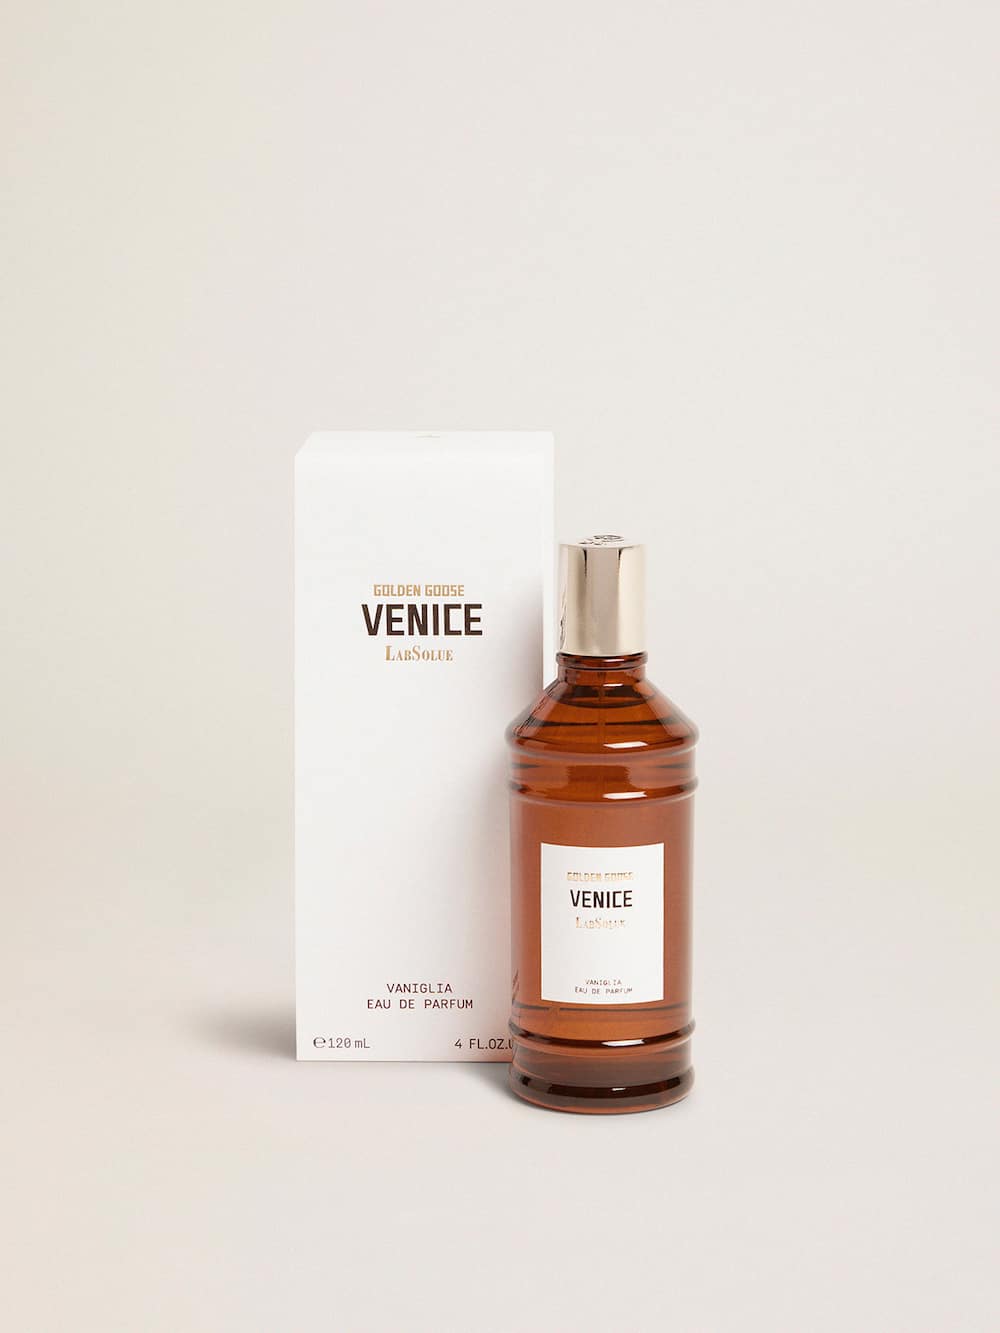 Golden Goose - Venice Essence Vanille Eau de Parfum 120 ml in 